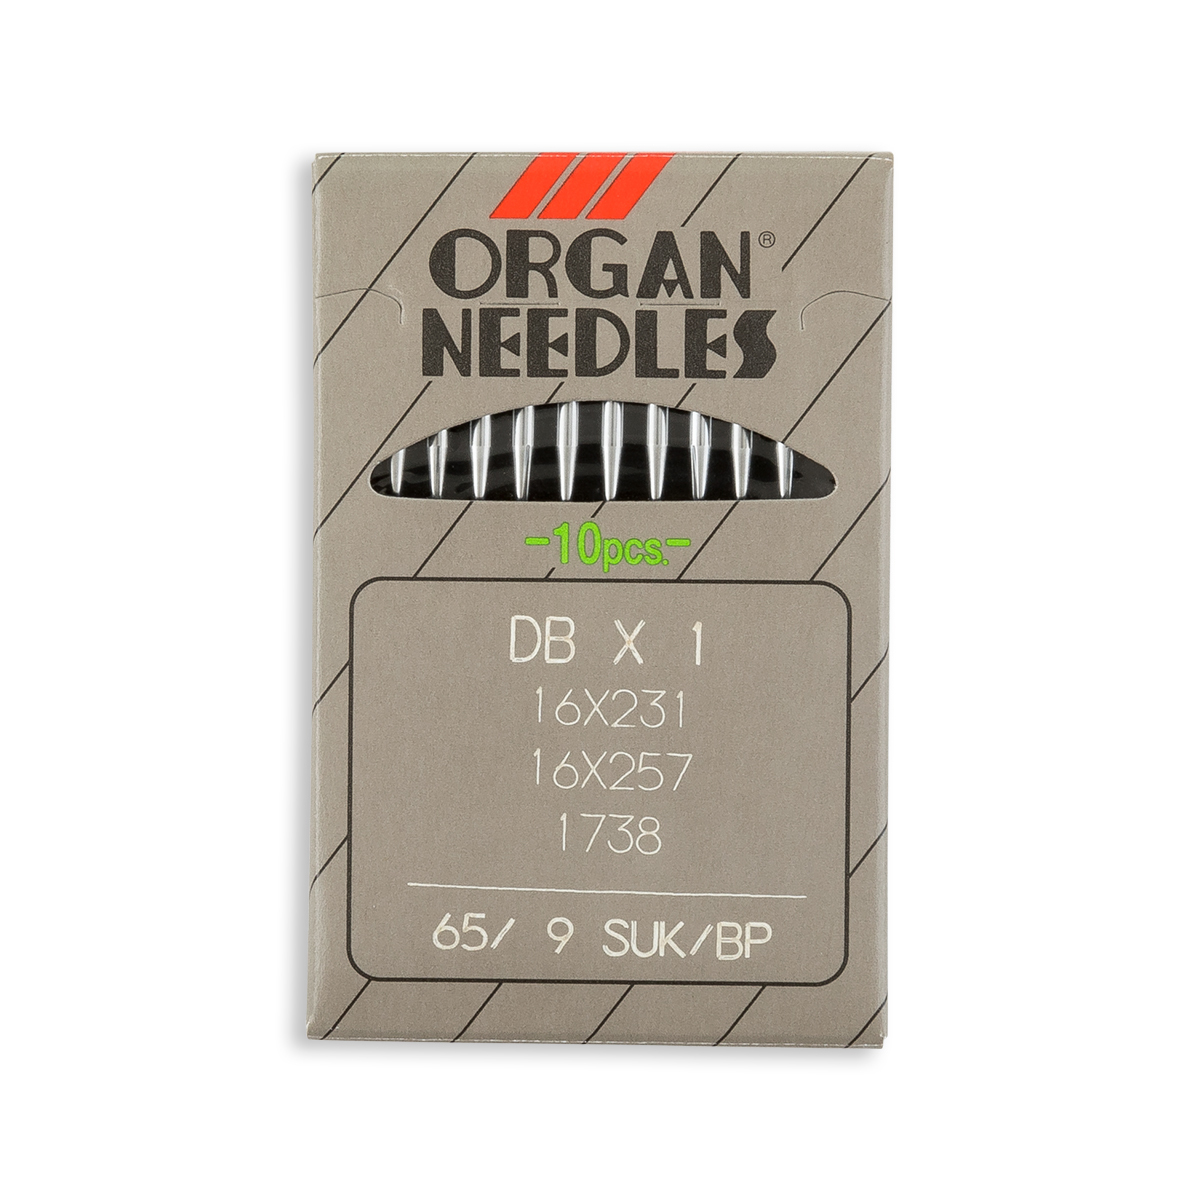 Dbx1 Organ Needles, 100 count